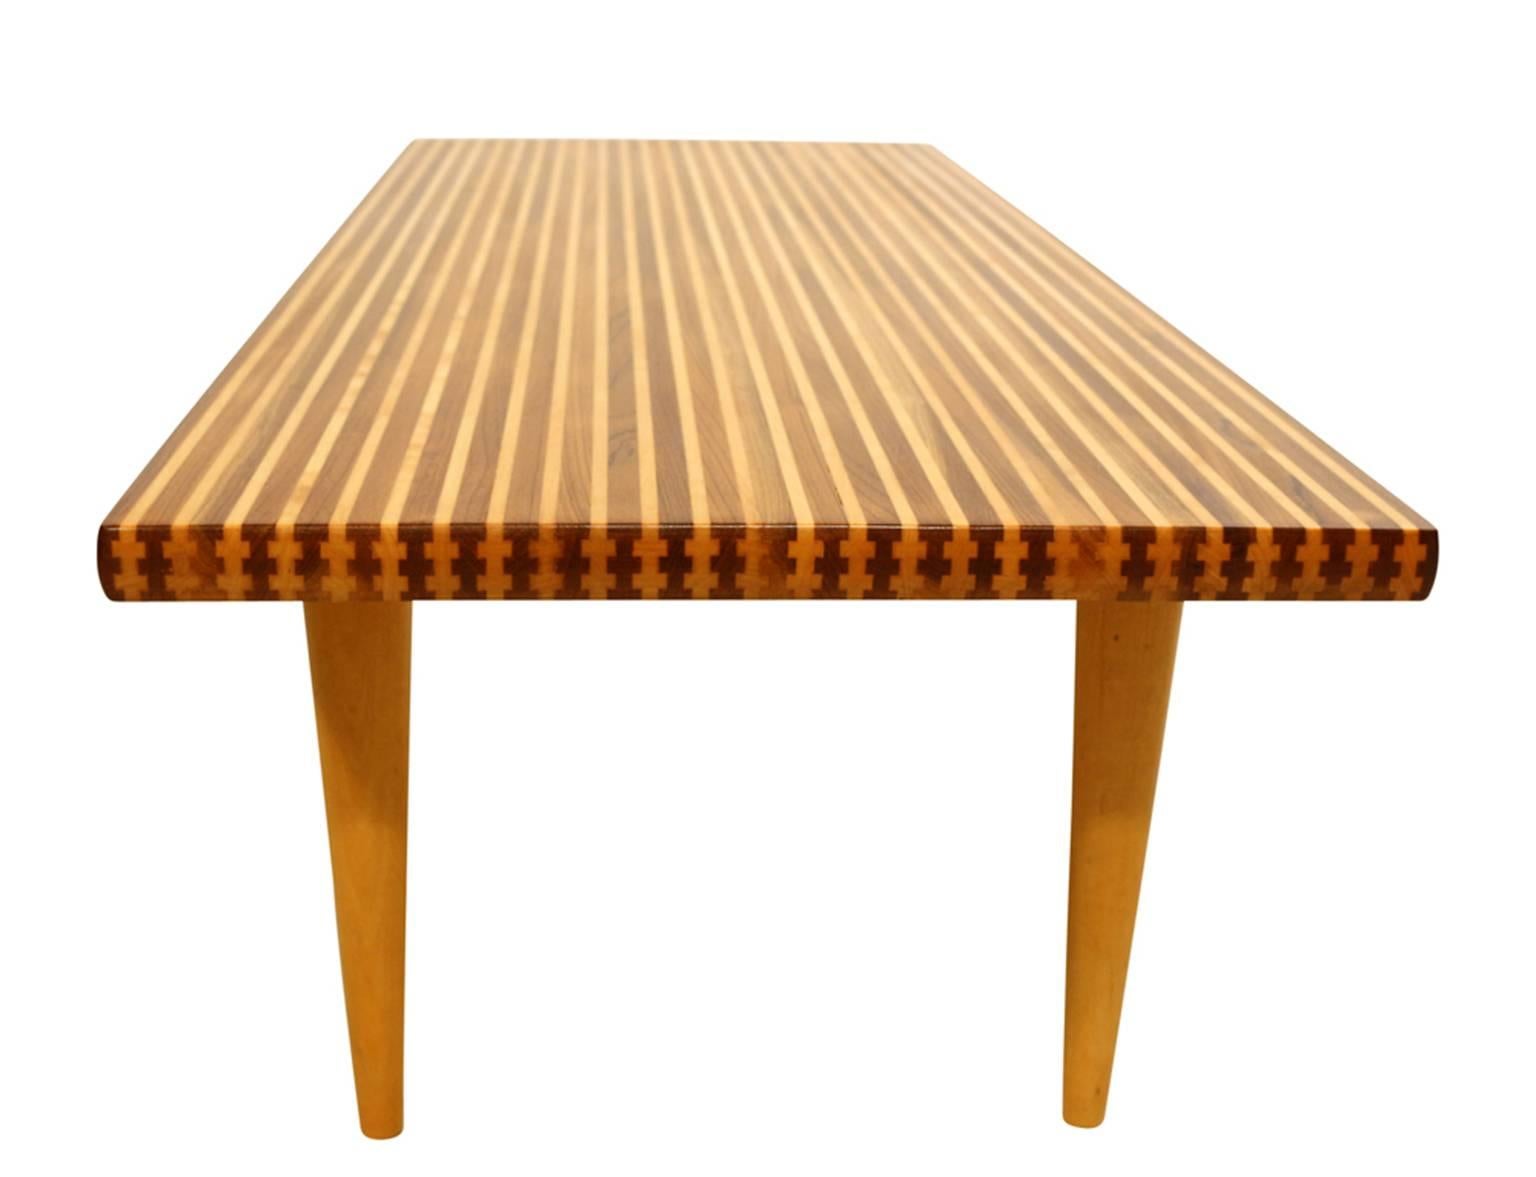 Scandinavian Modern Coffee Table Designed by Yngvar SandströM for Nk, Sweden